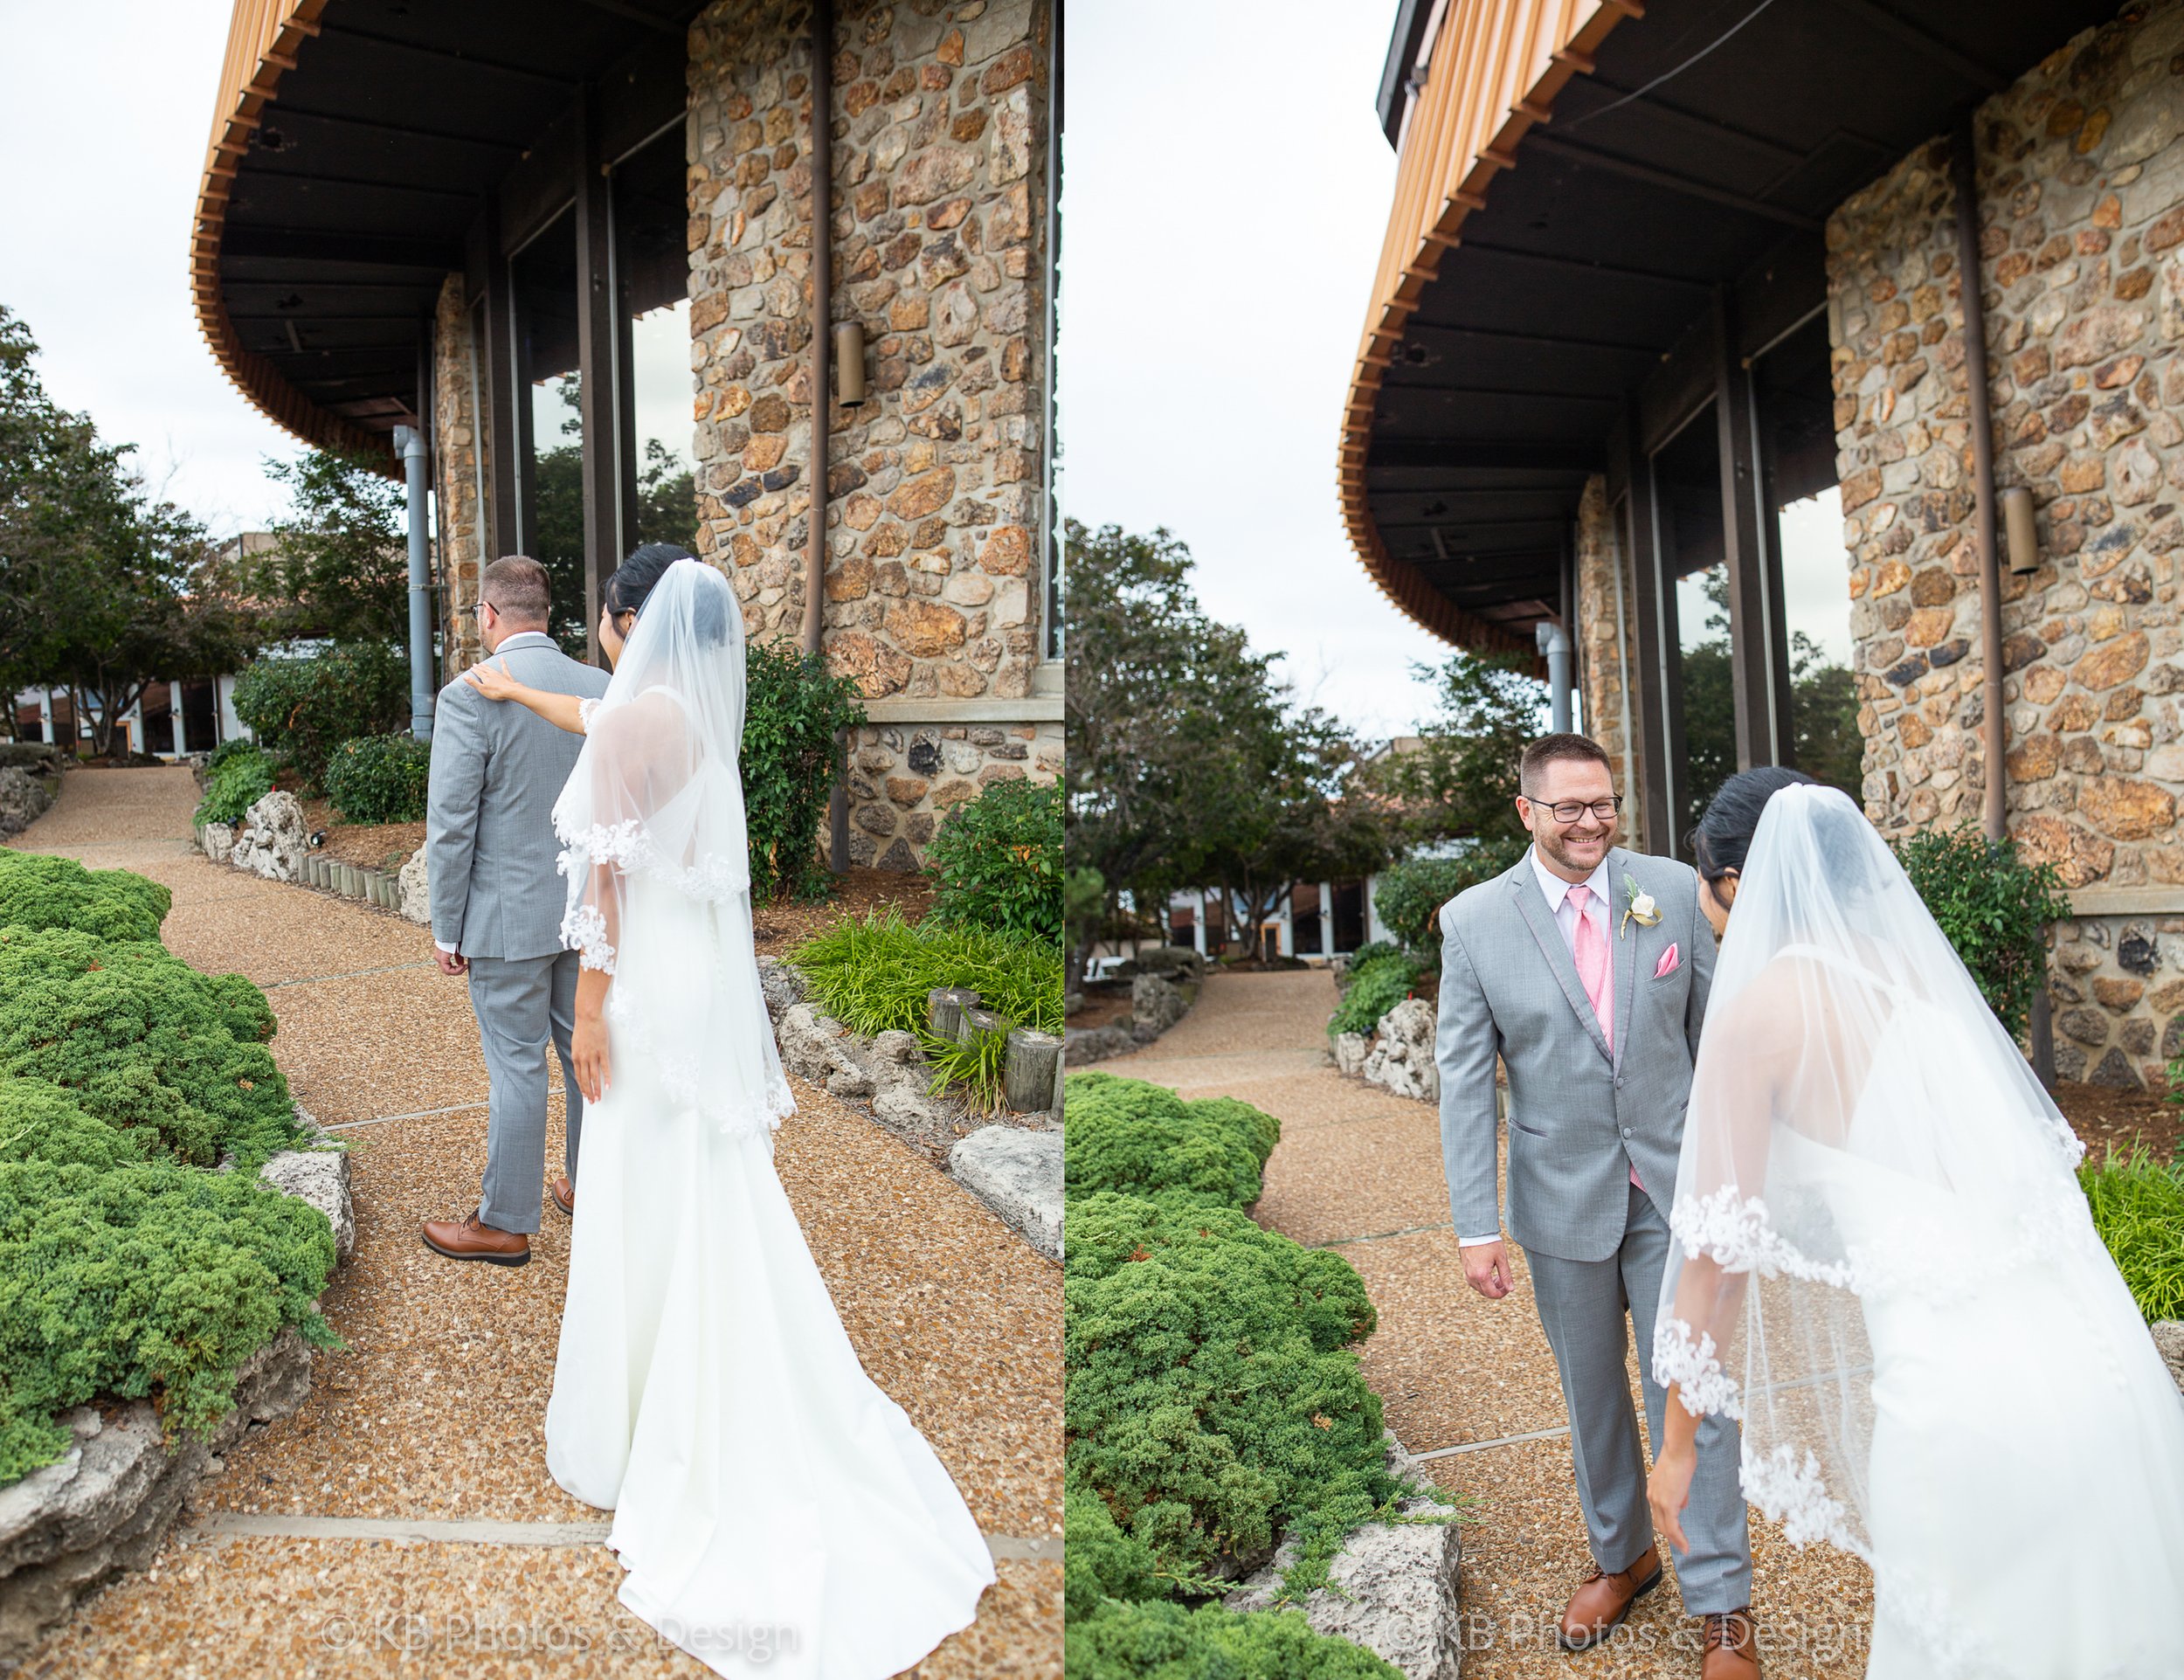 Wedding-Destination-Photography-Lake-of-the-Ozarks-Missouri-Nick_Irene-Jefferson-City-bride-groom-Lodge-of-Four-Seasons-wedding-photographer-KB-Photos-and-Design-407.jpg